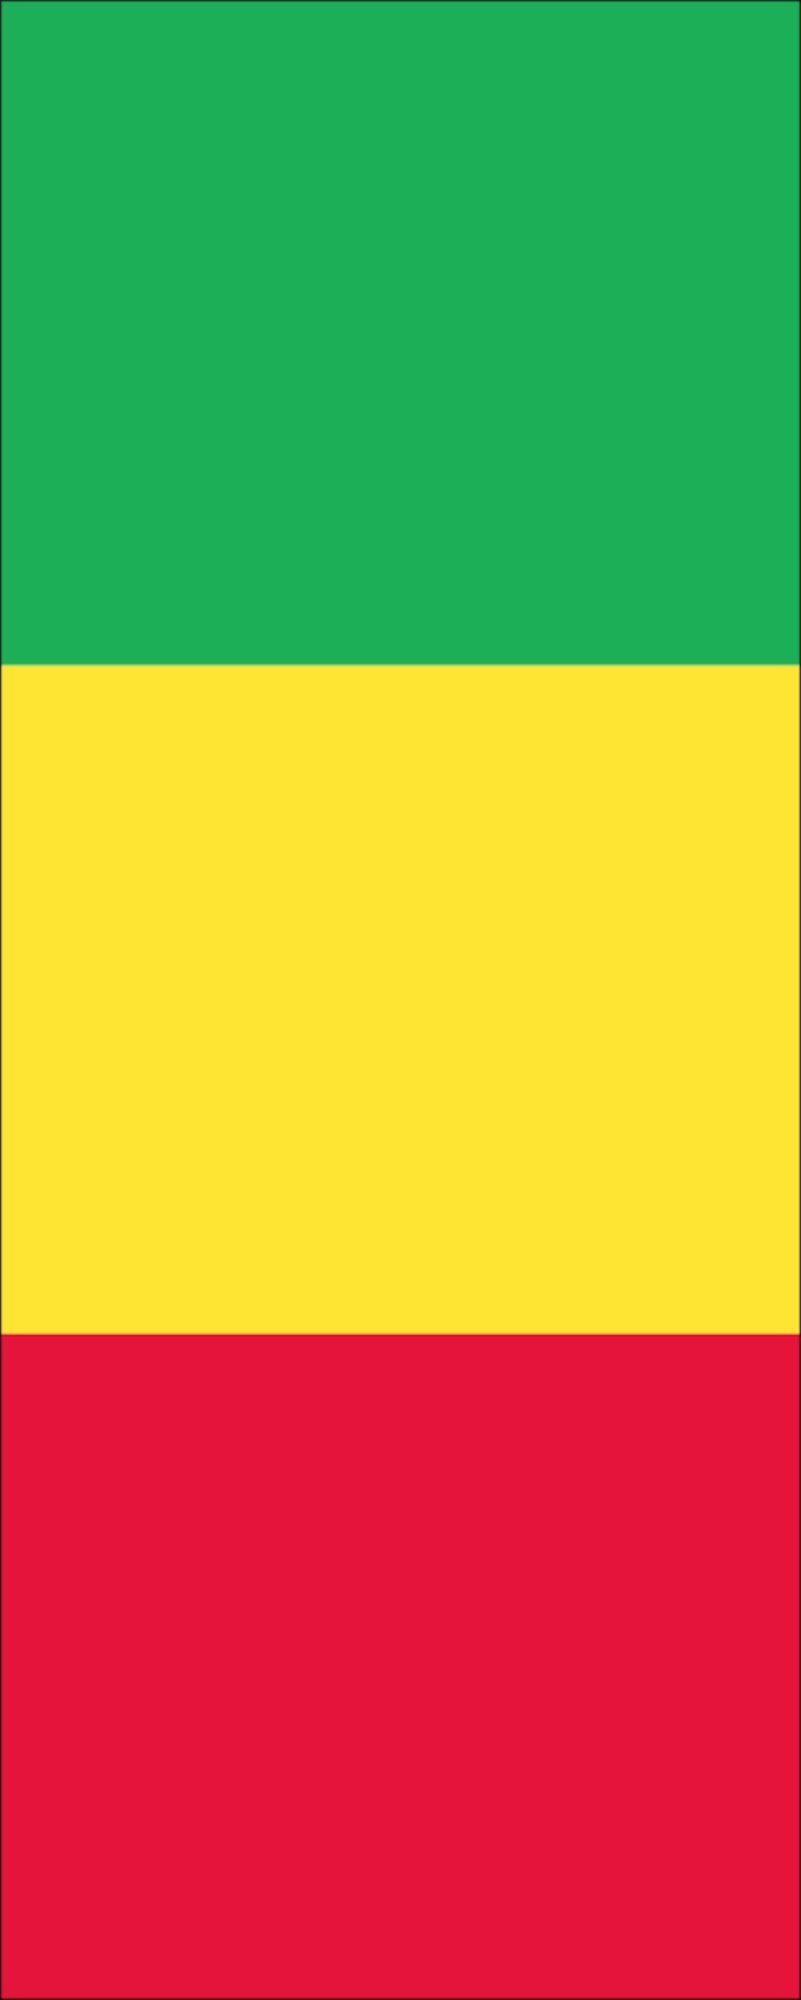 Mali flaggenmeer g/m² 160 Flagge Hochformat